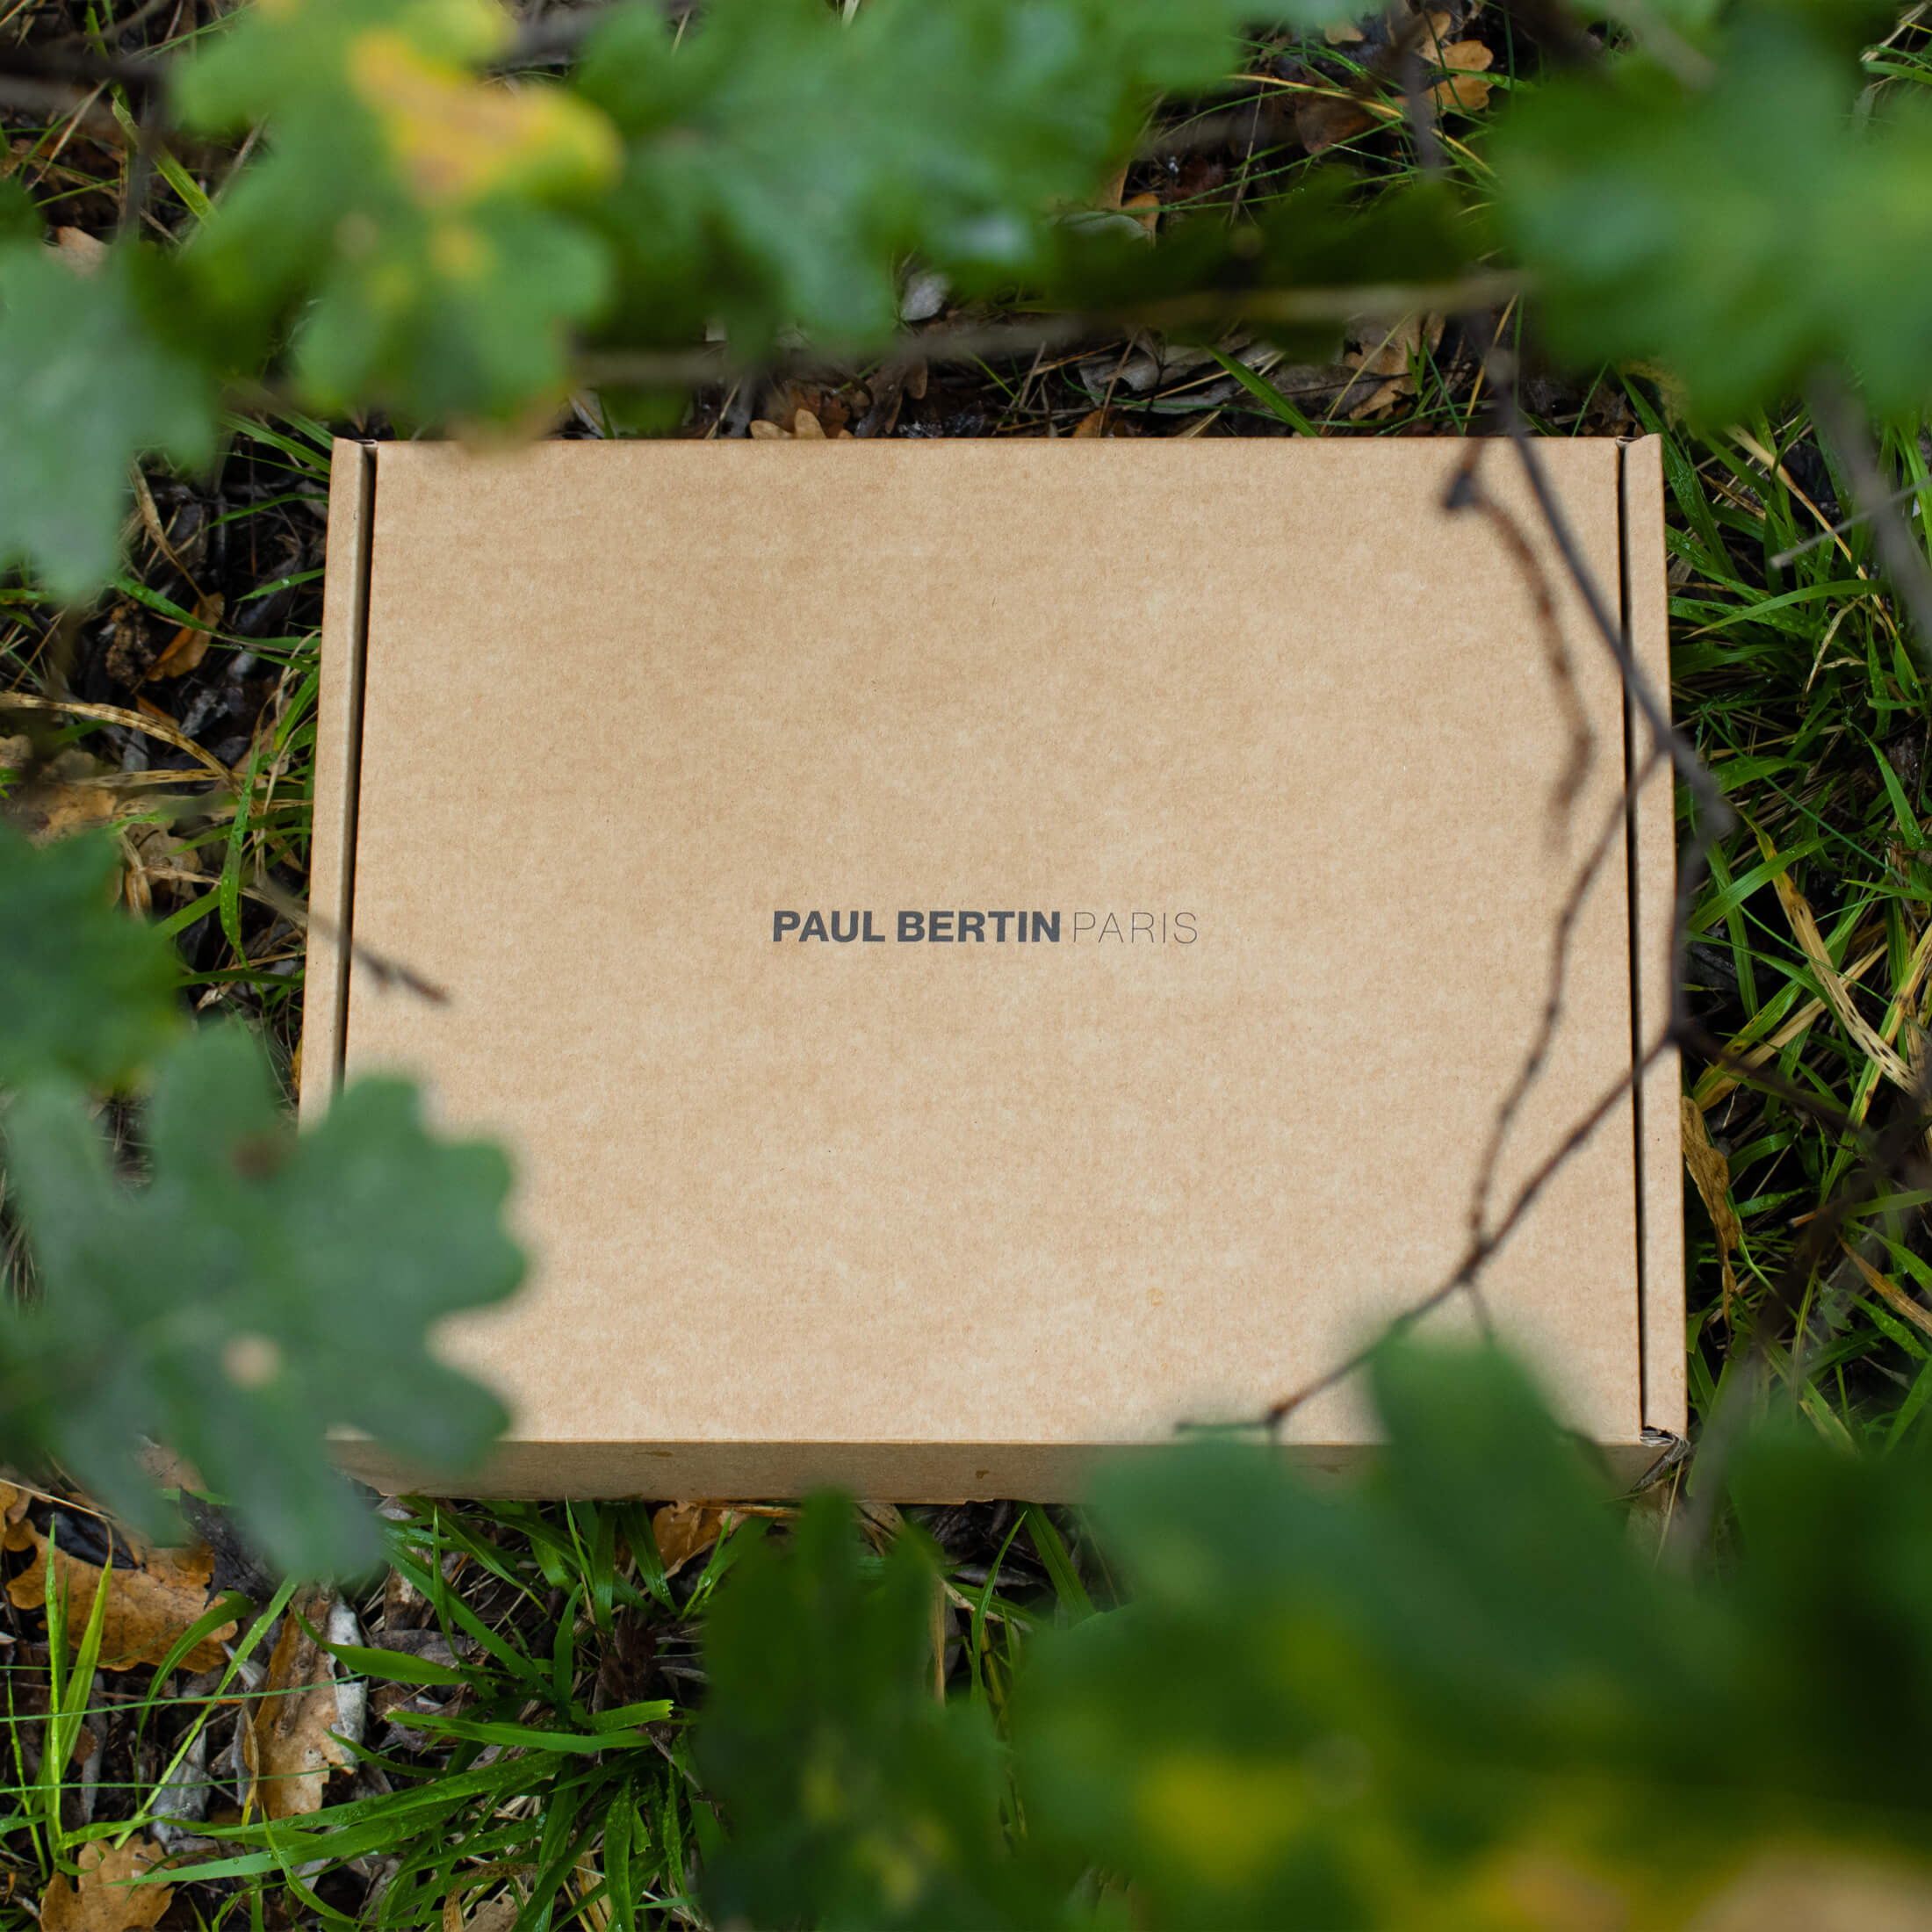 un carton recyclé de Paul Bertin Paris en foret